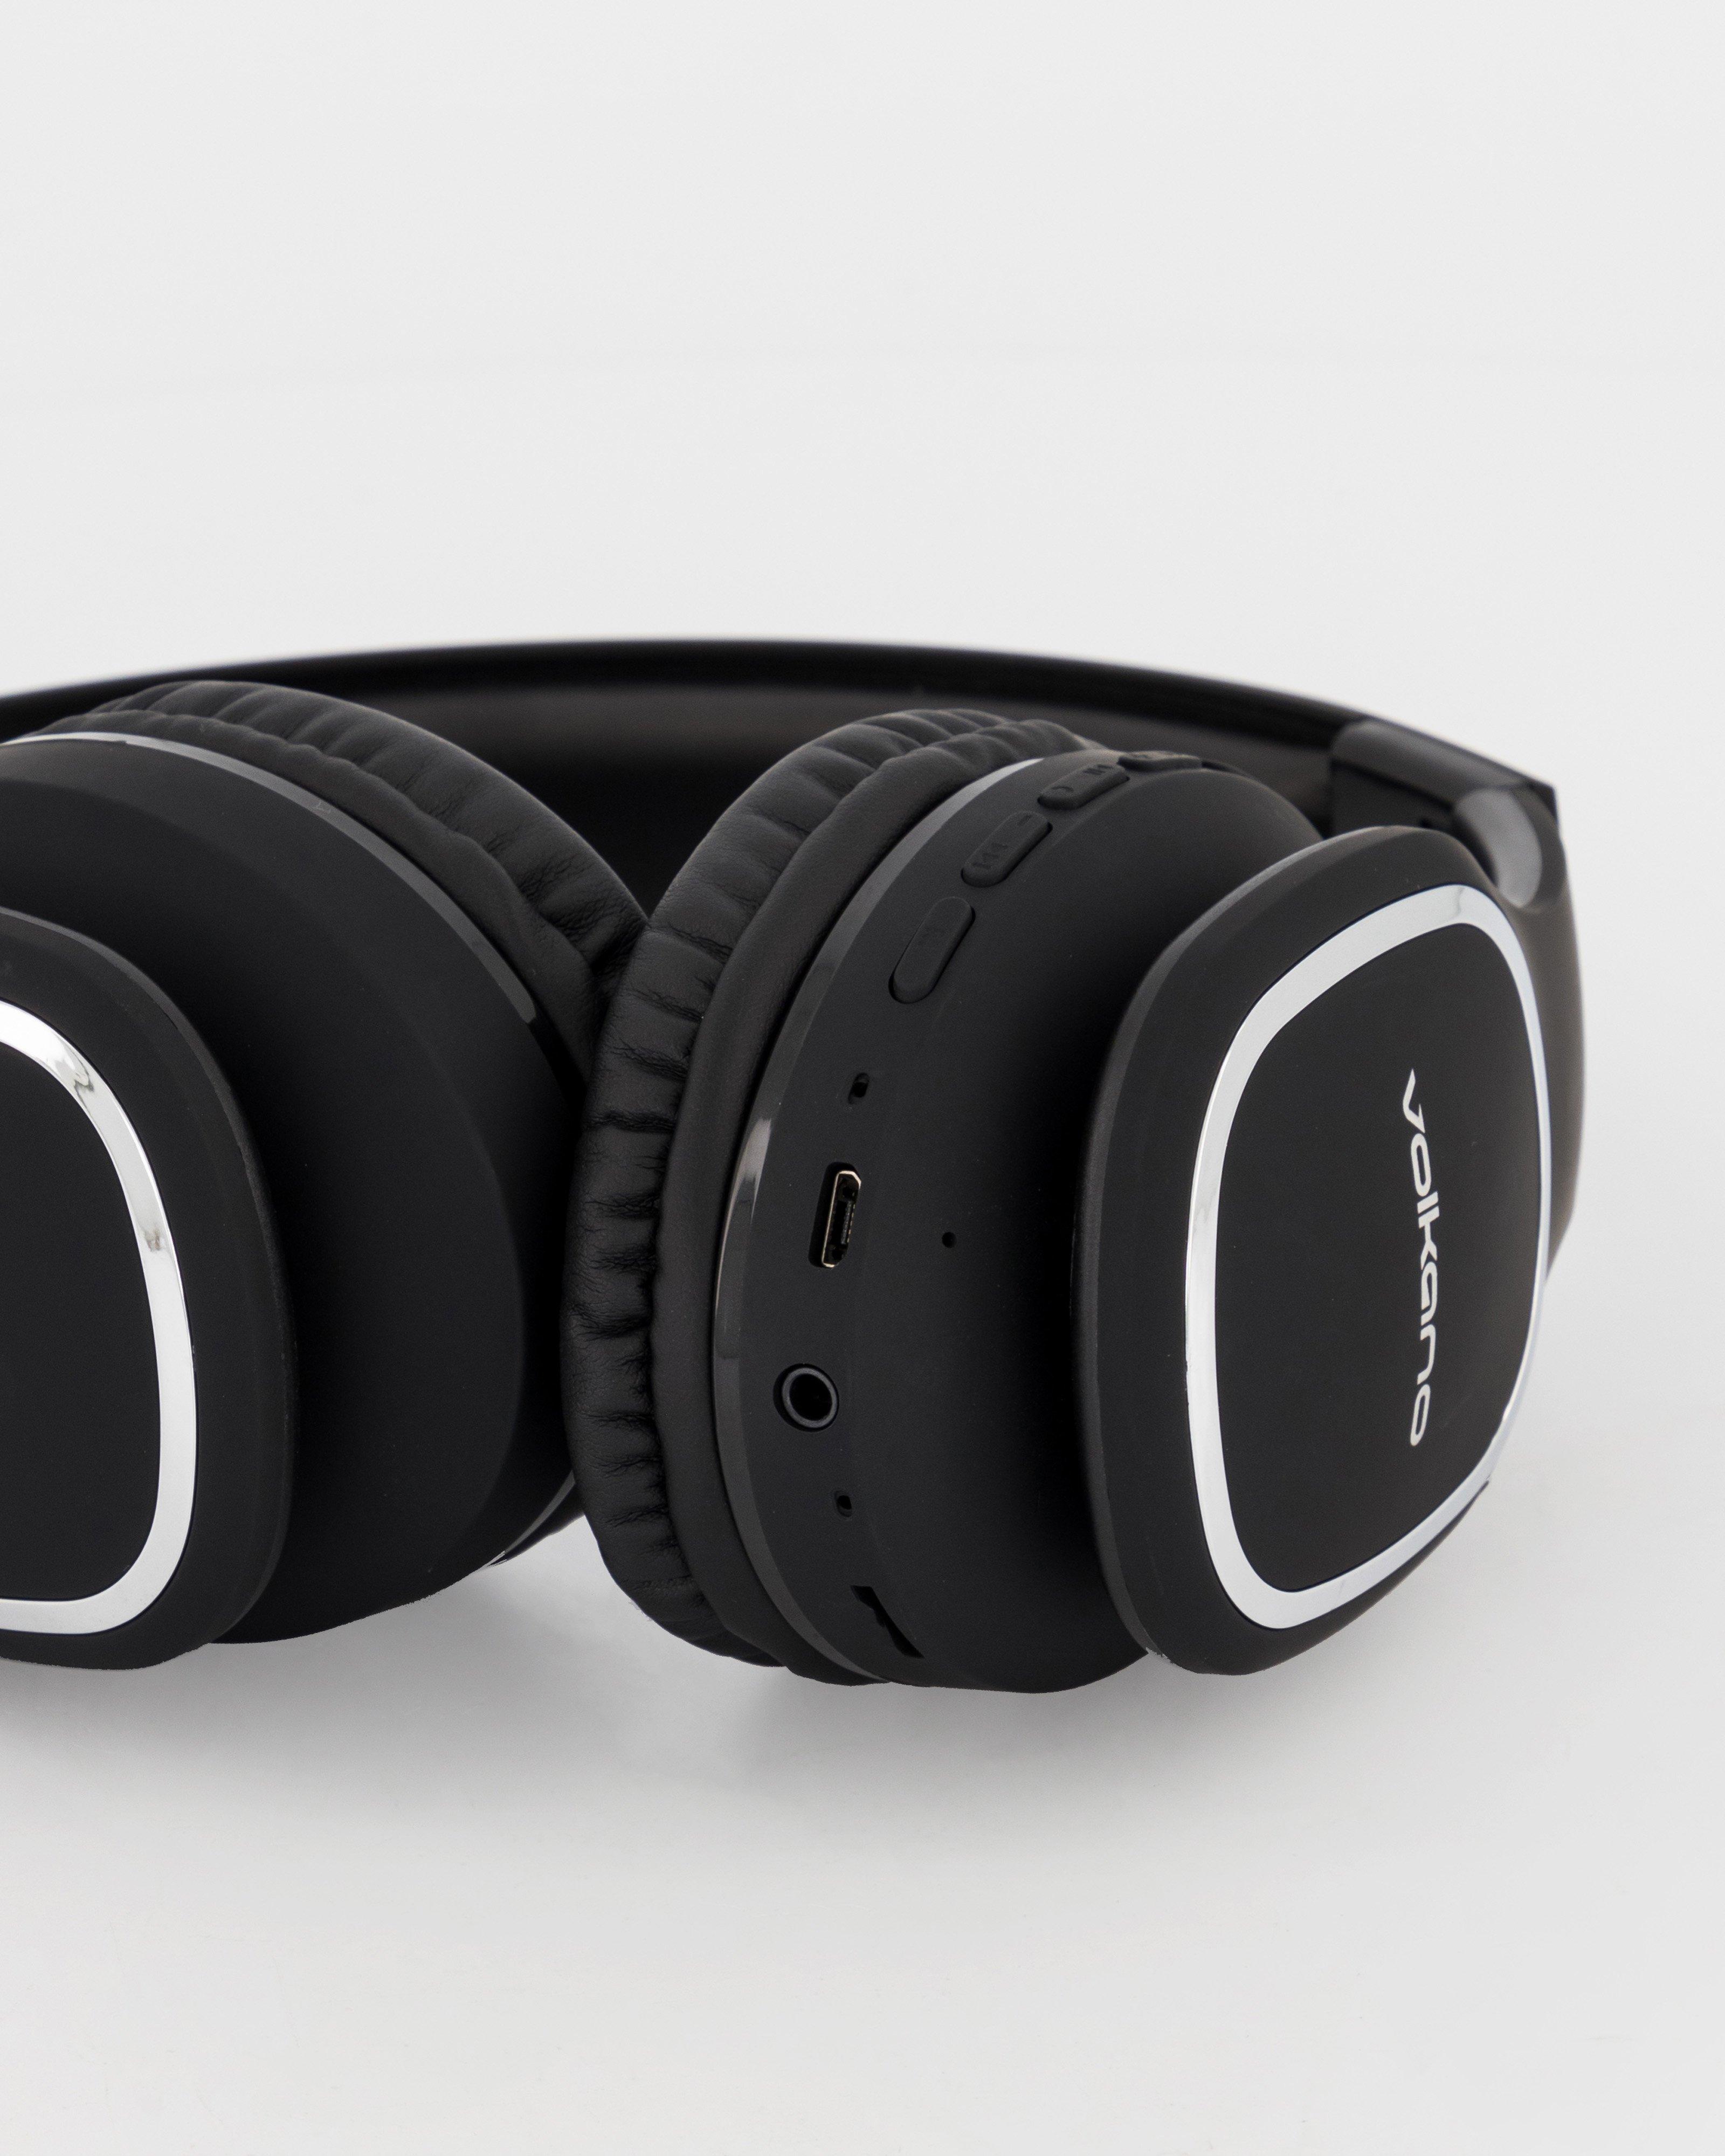 Volkano Phonic Over-Ear Headphones -  Black